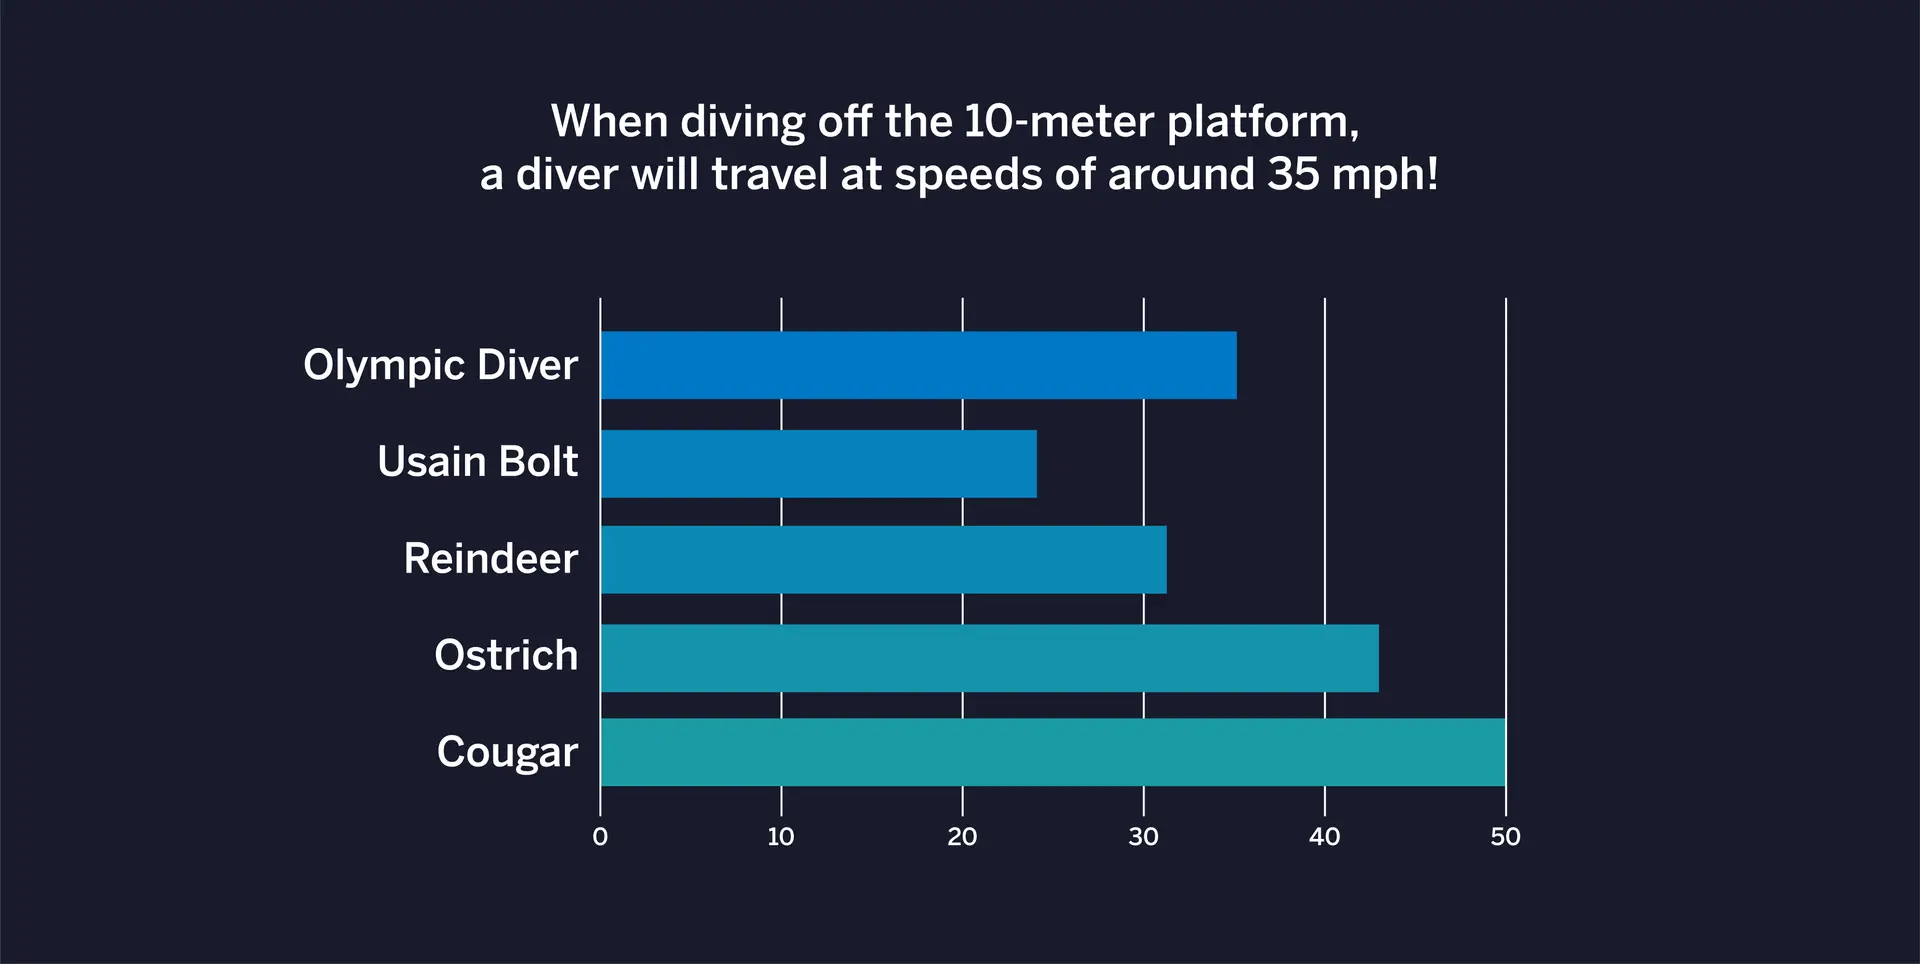 Upper hand – a diver will travel at speeds of around 35 mph off the 10-meter platform